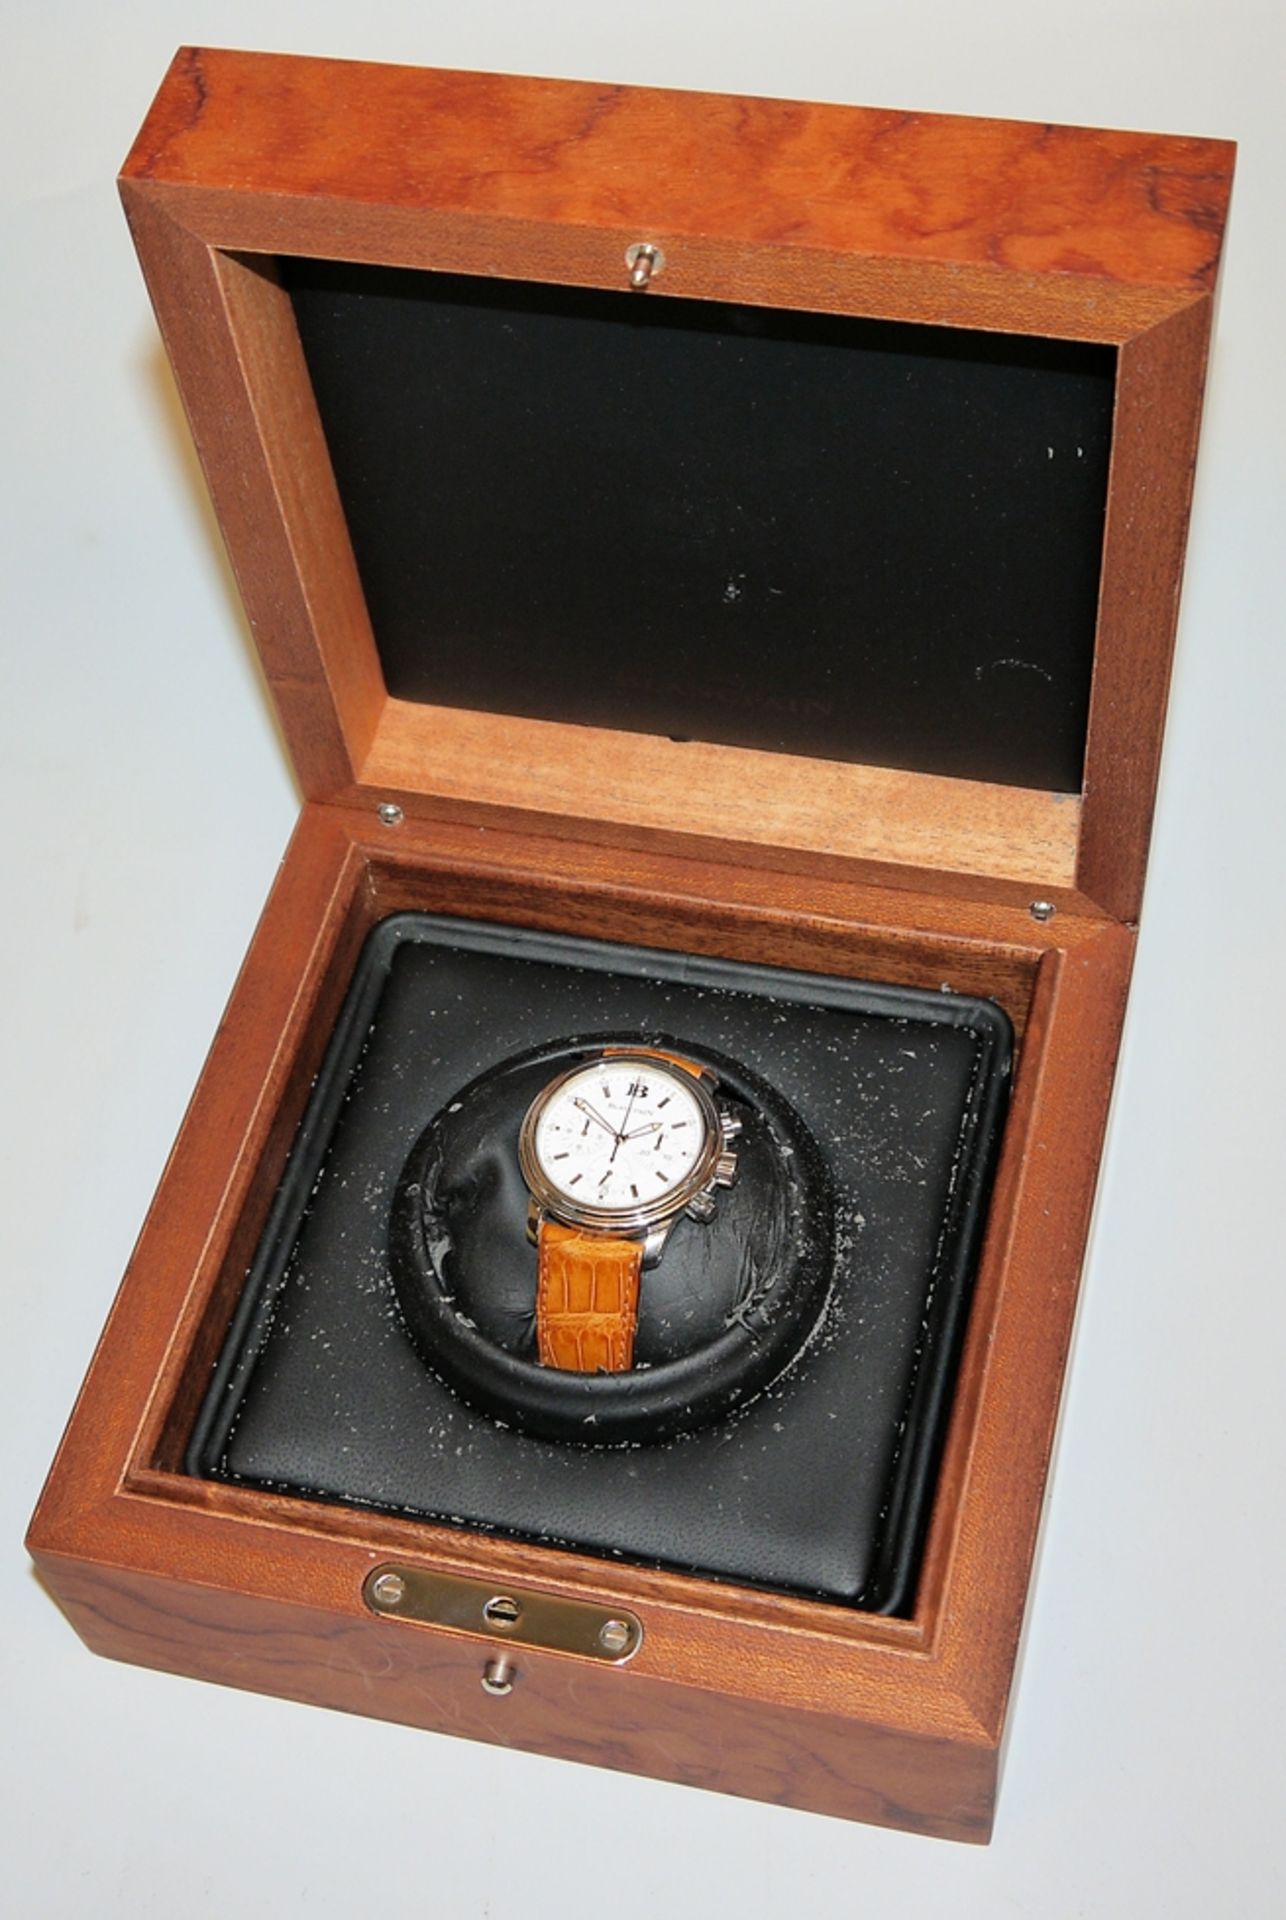 Blancpain-Lèman, 1990s men's chronograph - Image 2 of 3